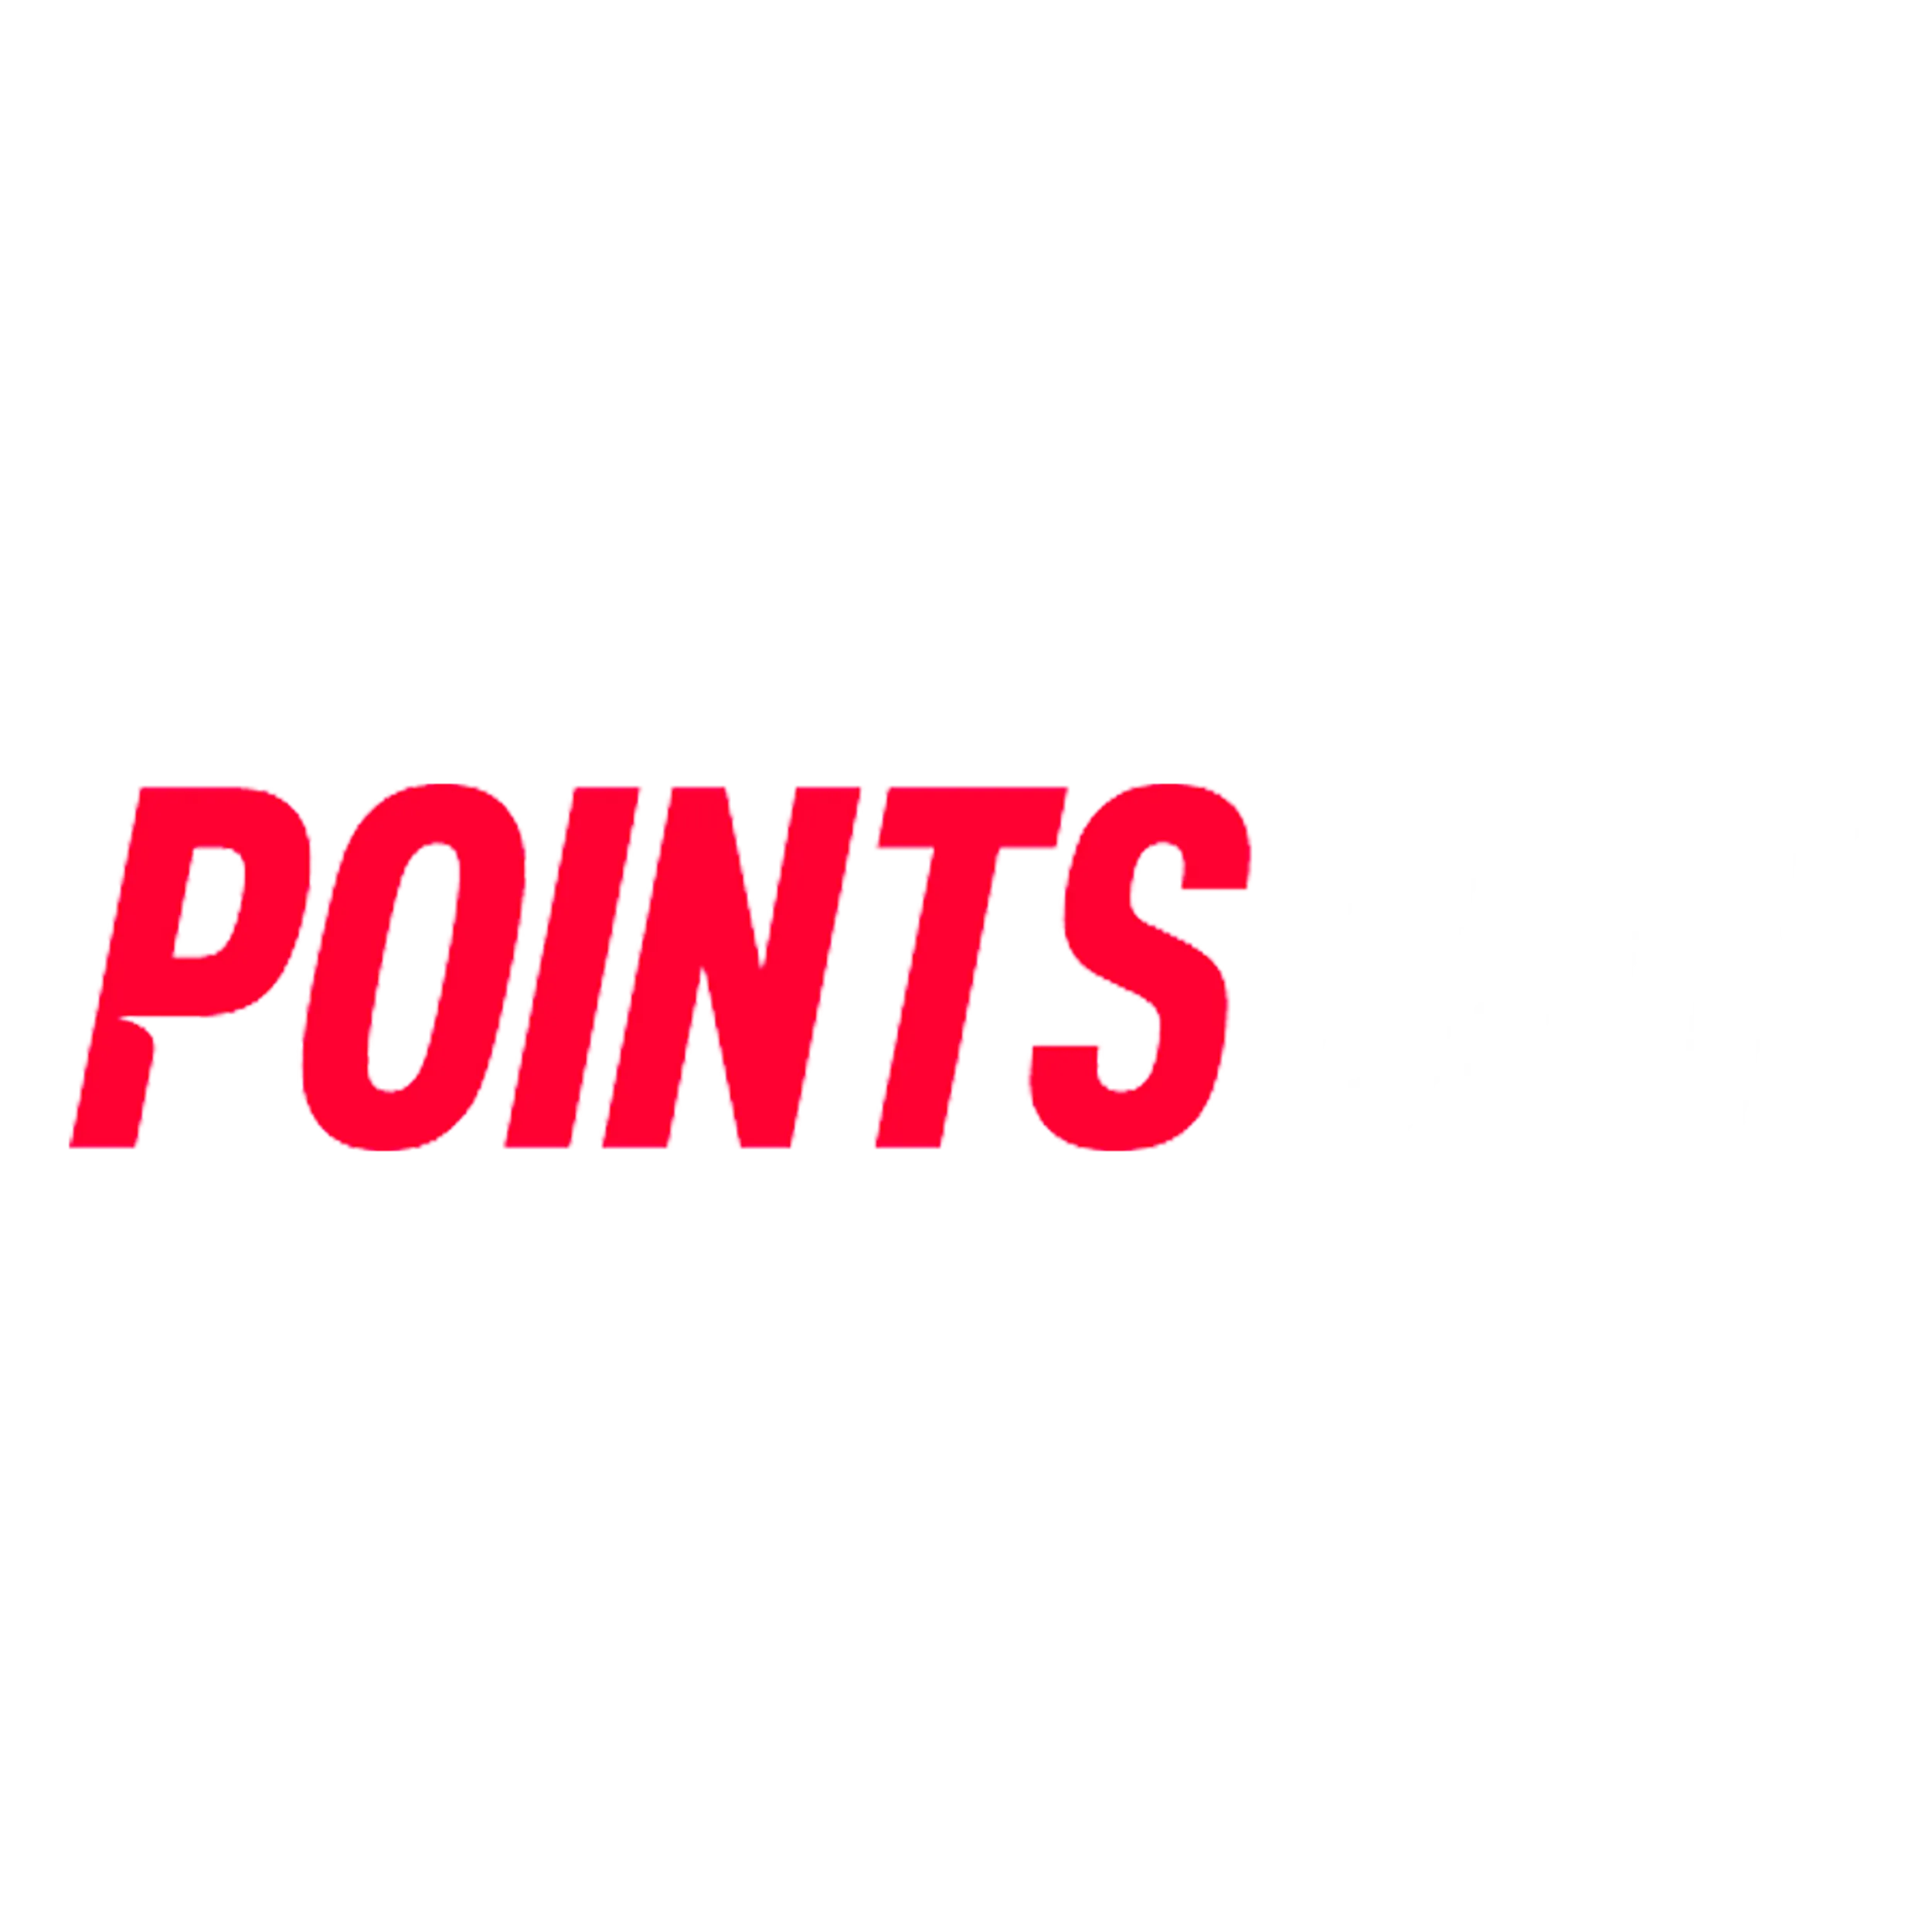 Pointsbet sportsbook logo w